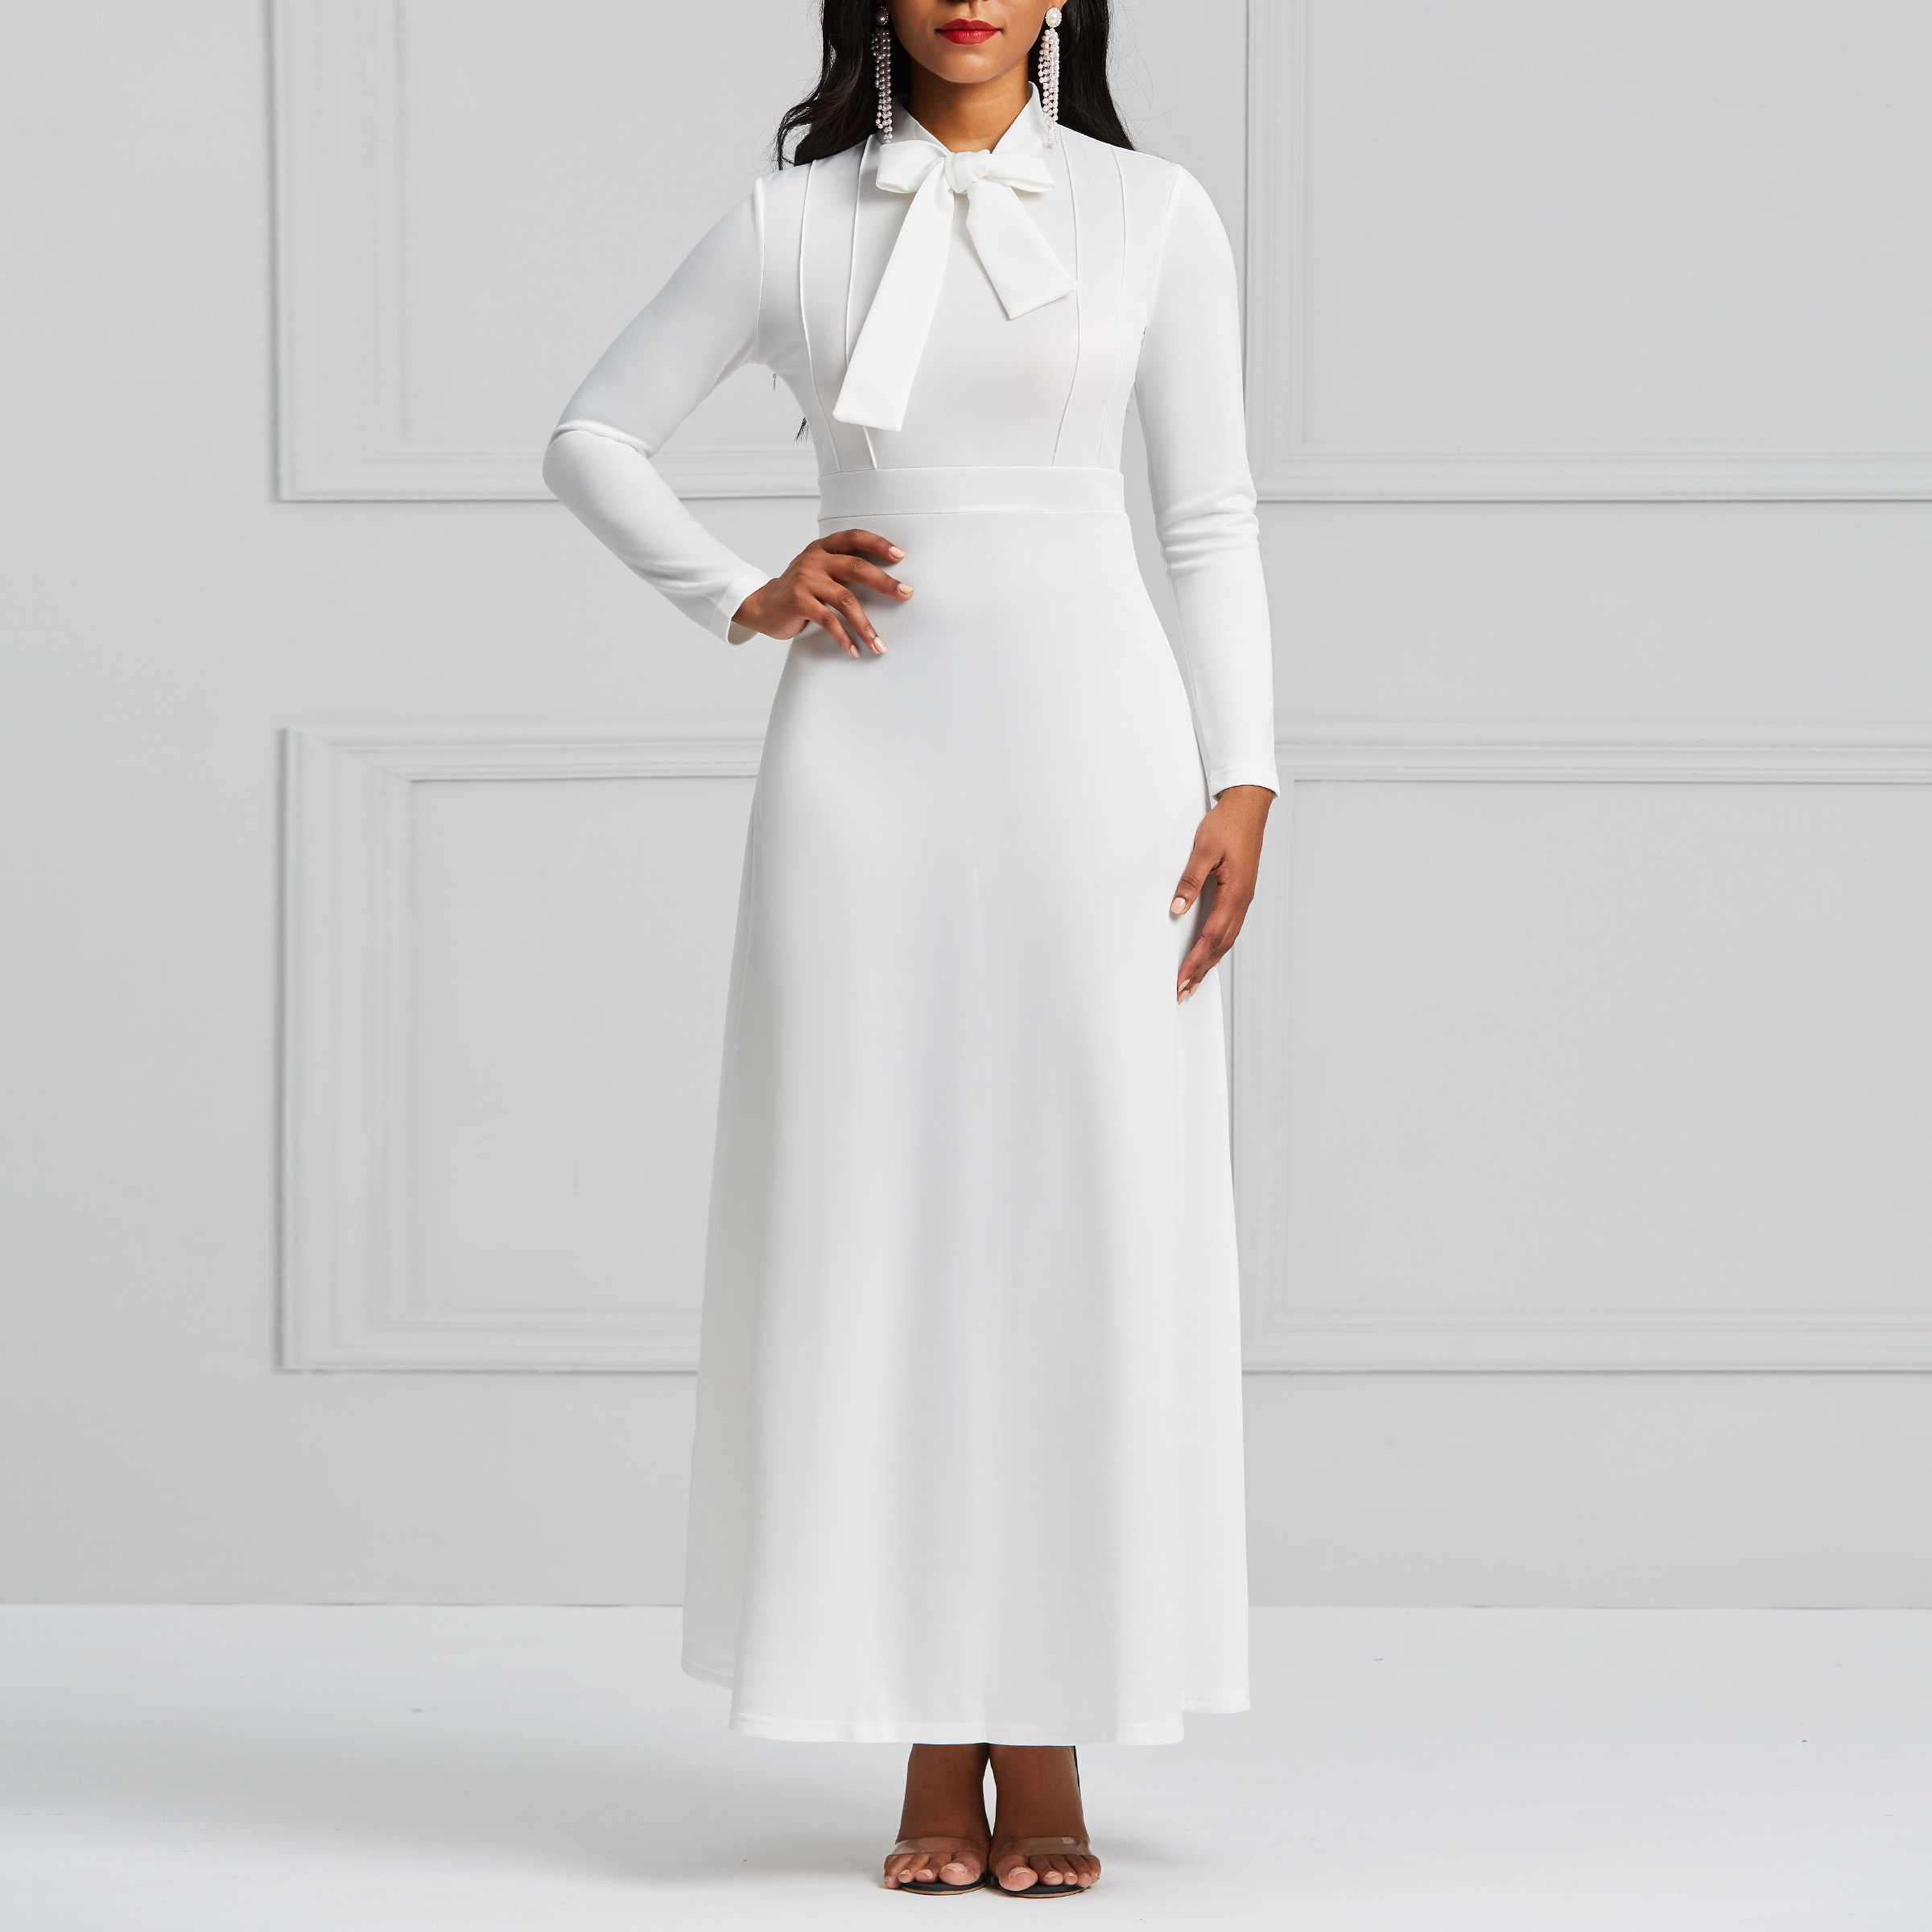 Ericdress White Maxi Dress Long Sleeves Bowknot Plain Women's Maxi Dress